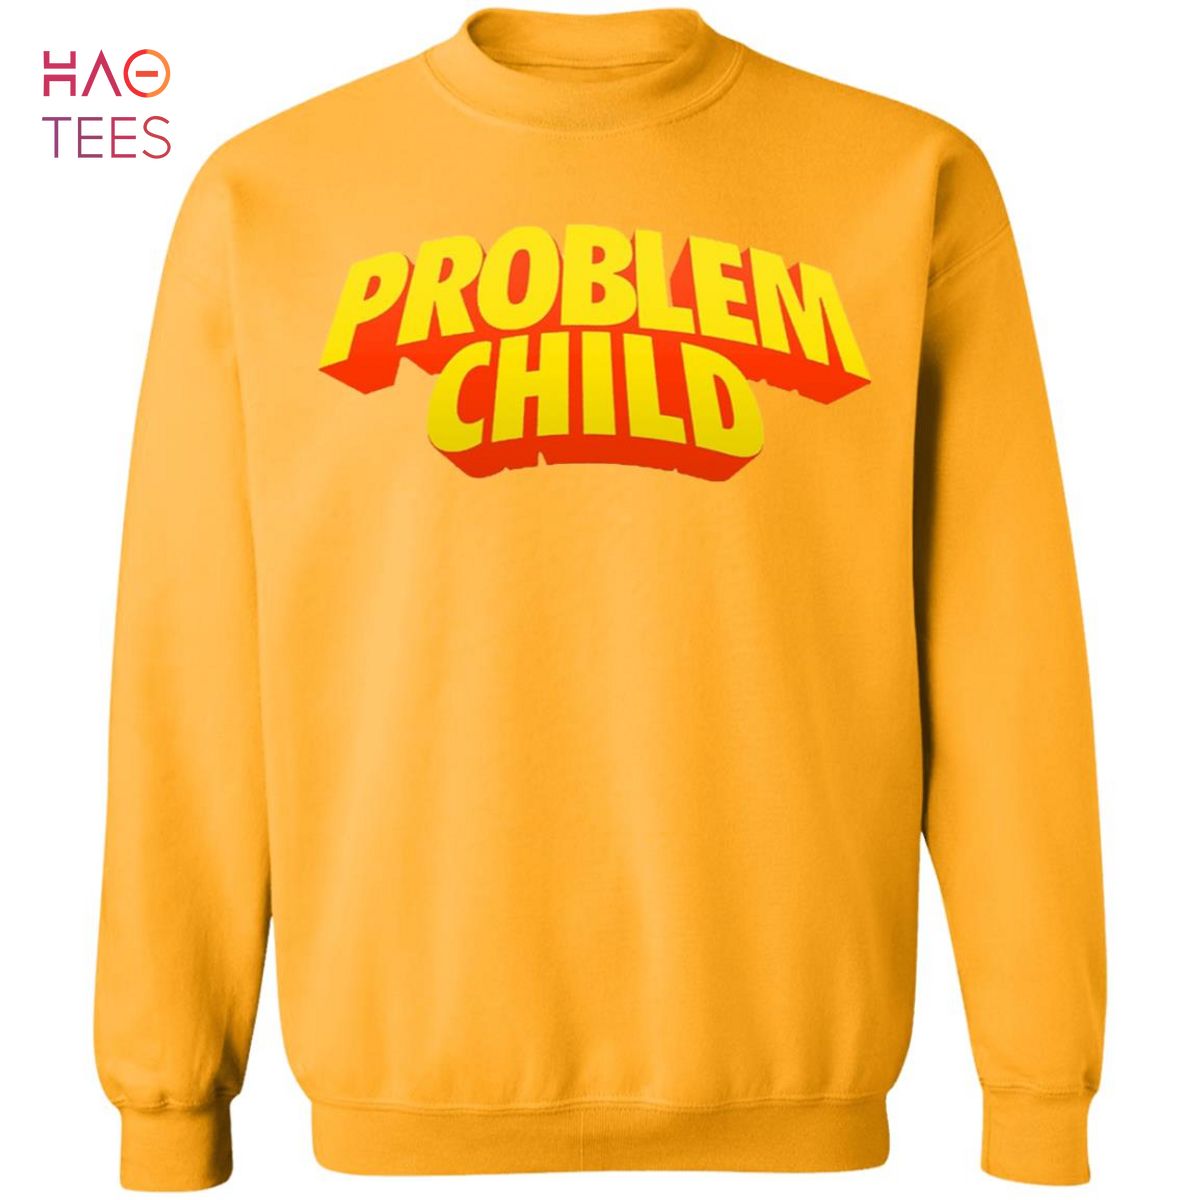 [NEW] Problem Child Sweater